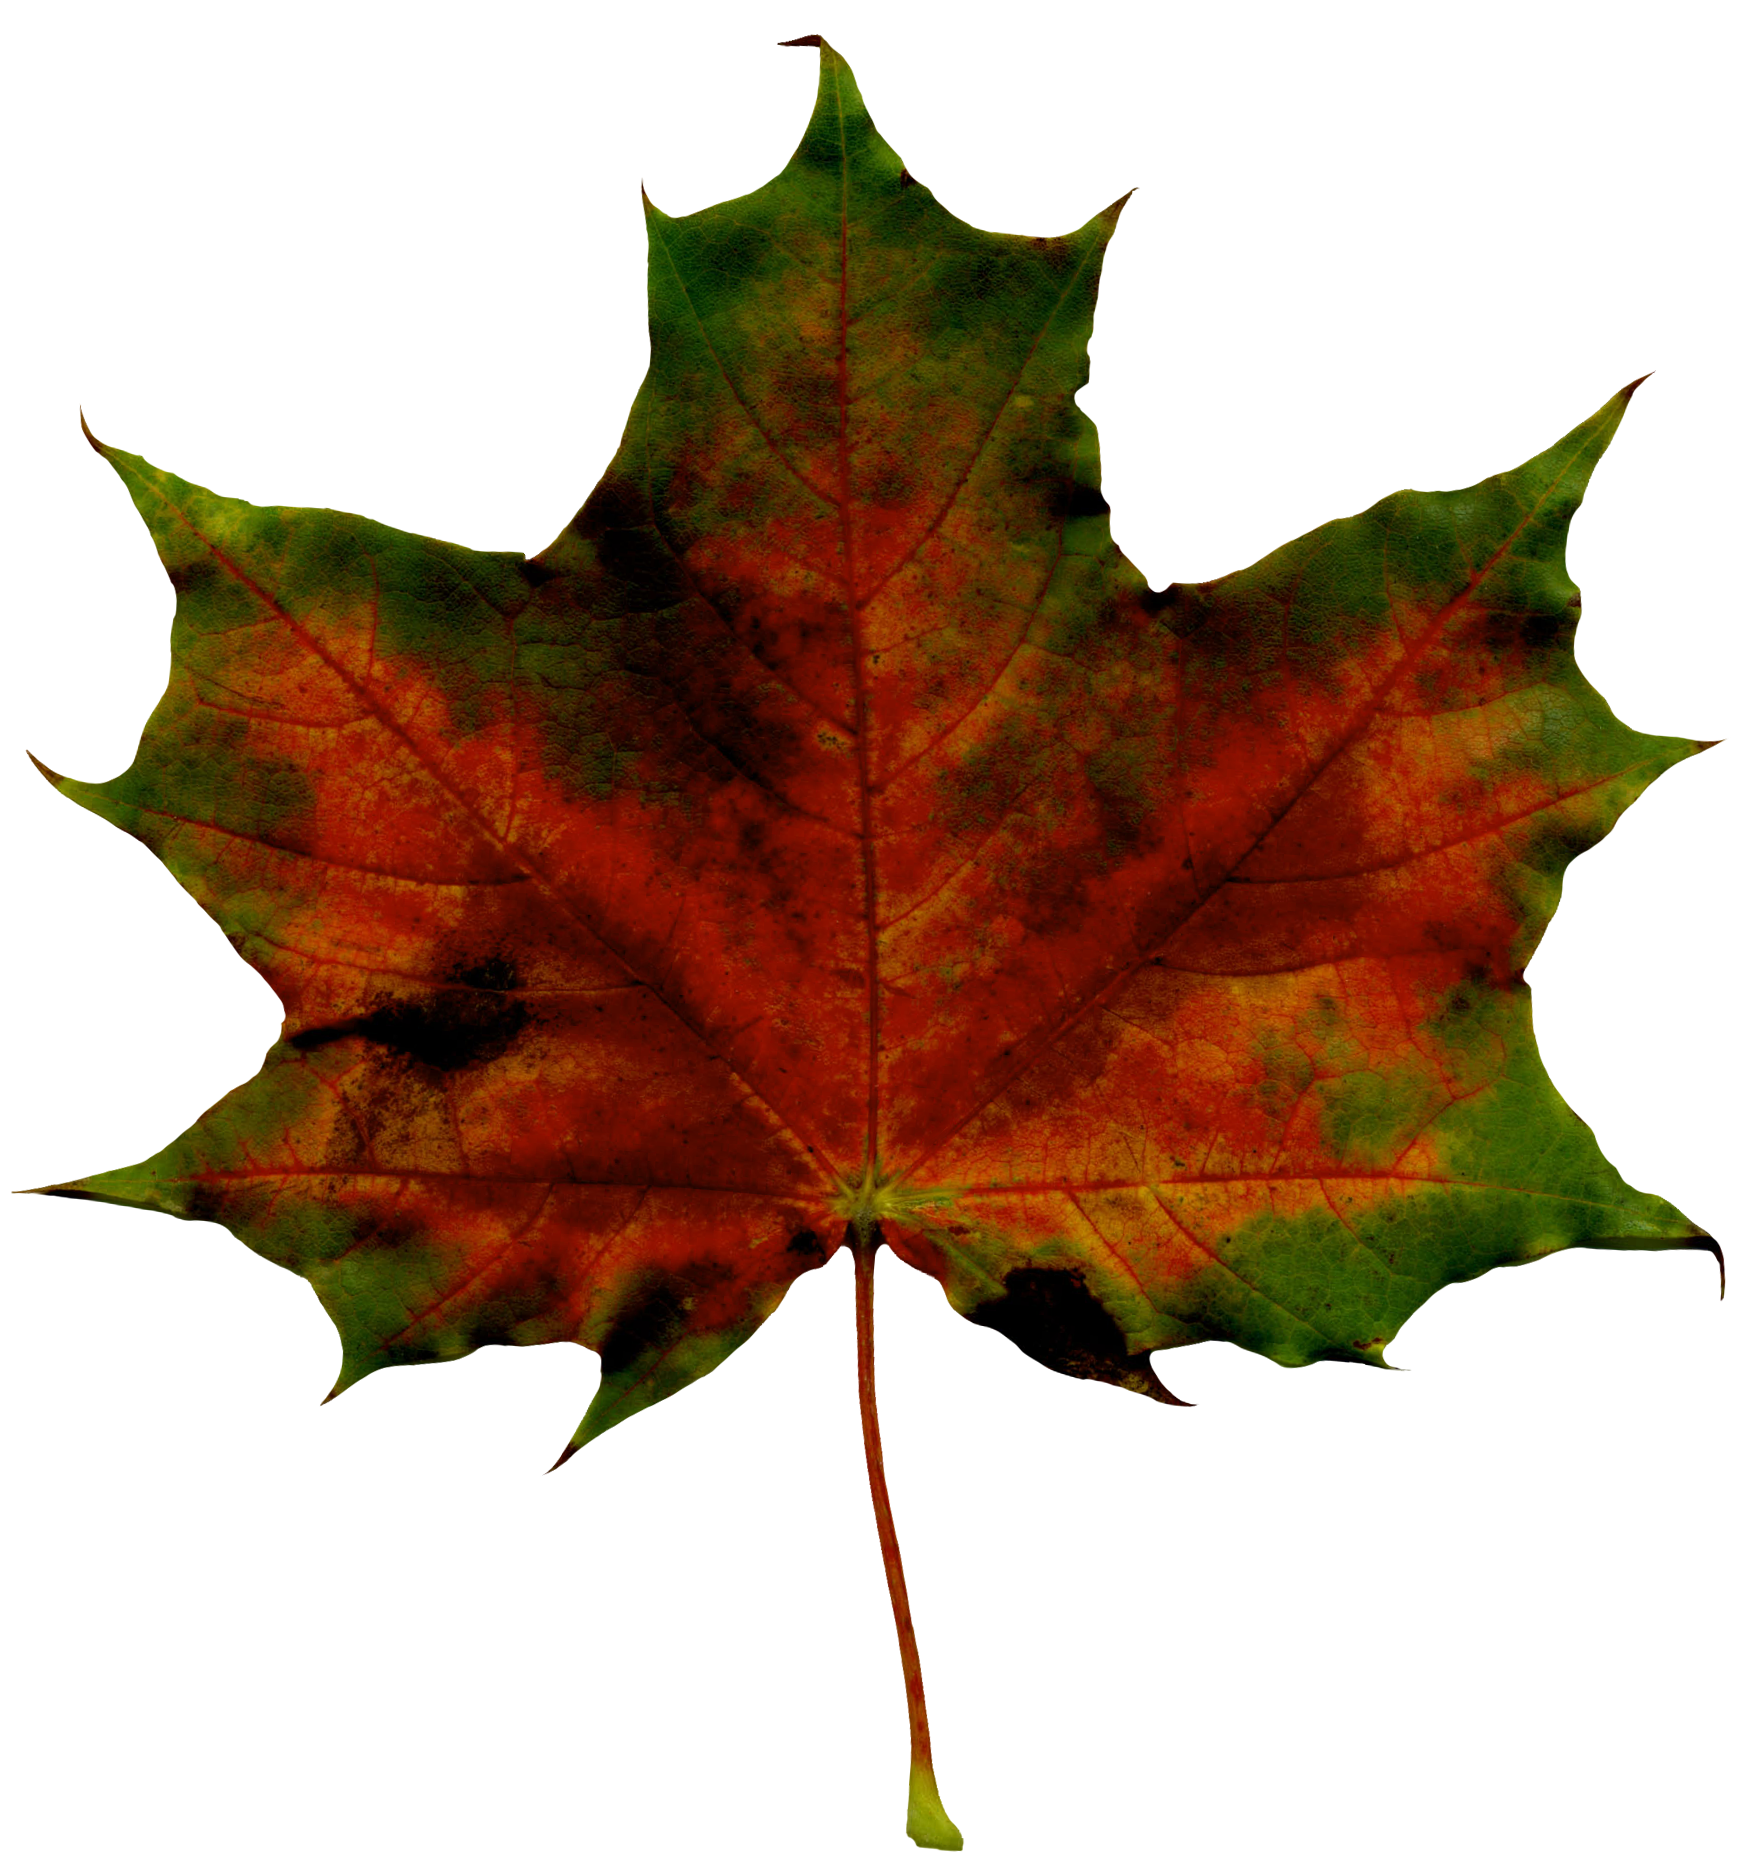 october clipart autumn leaf